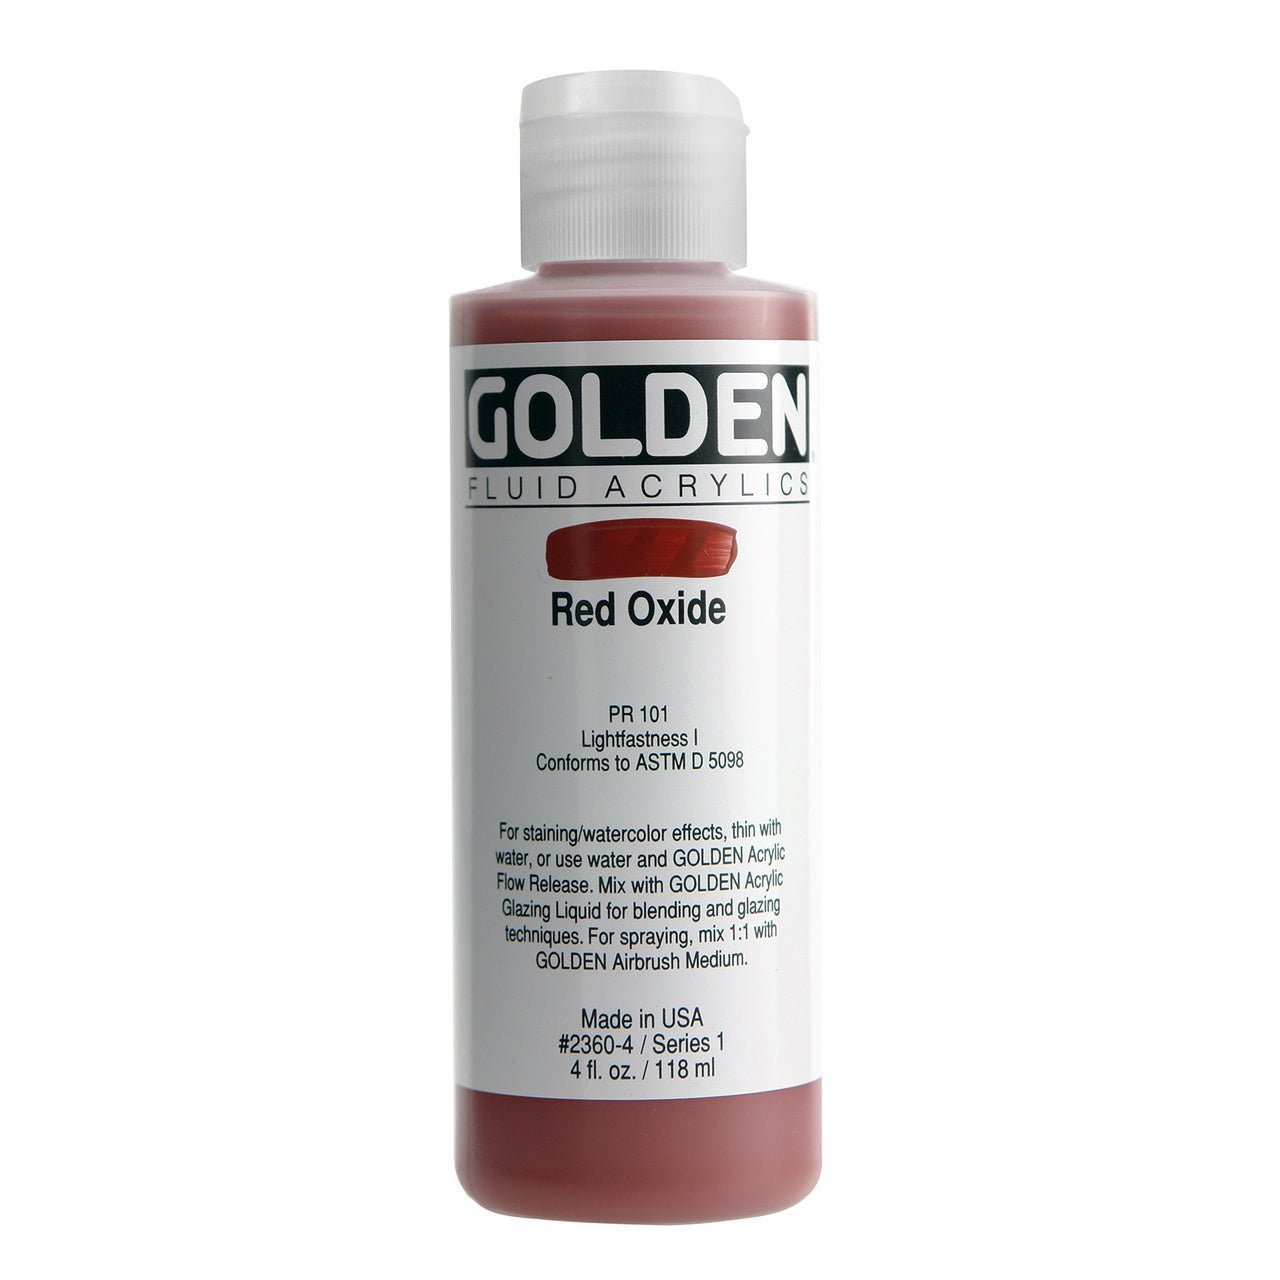 Golden Fluid Acrylic Red Oxide 4 oz - merriartist.com